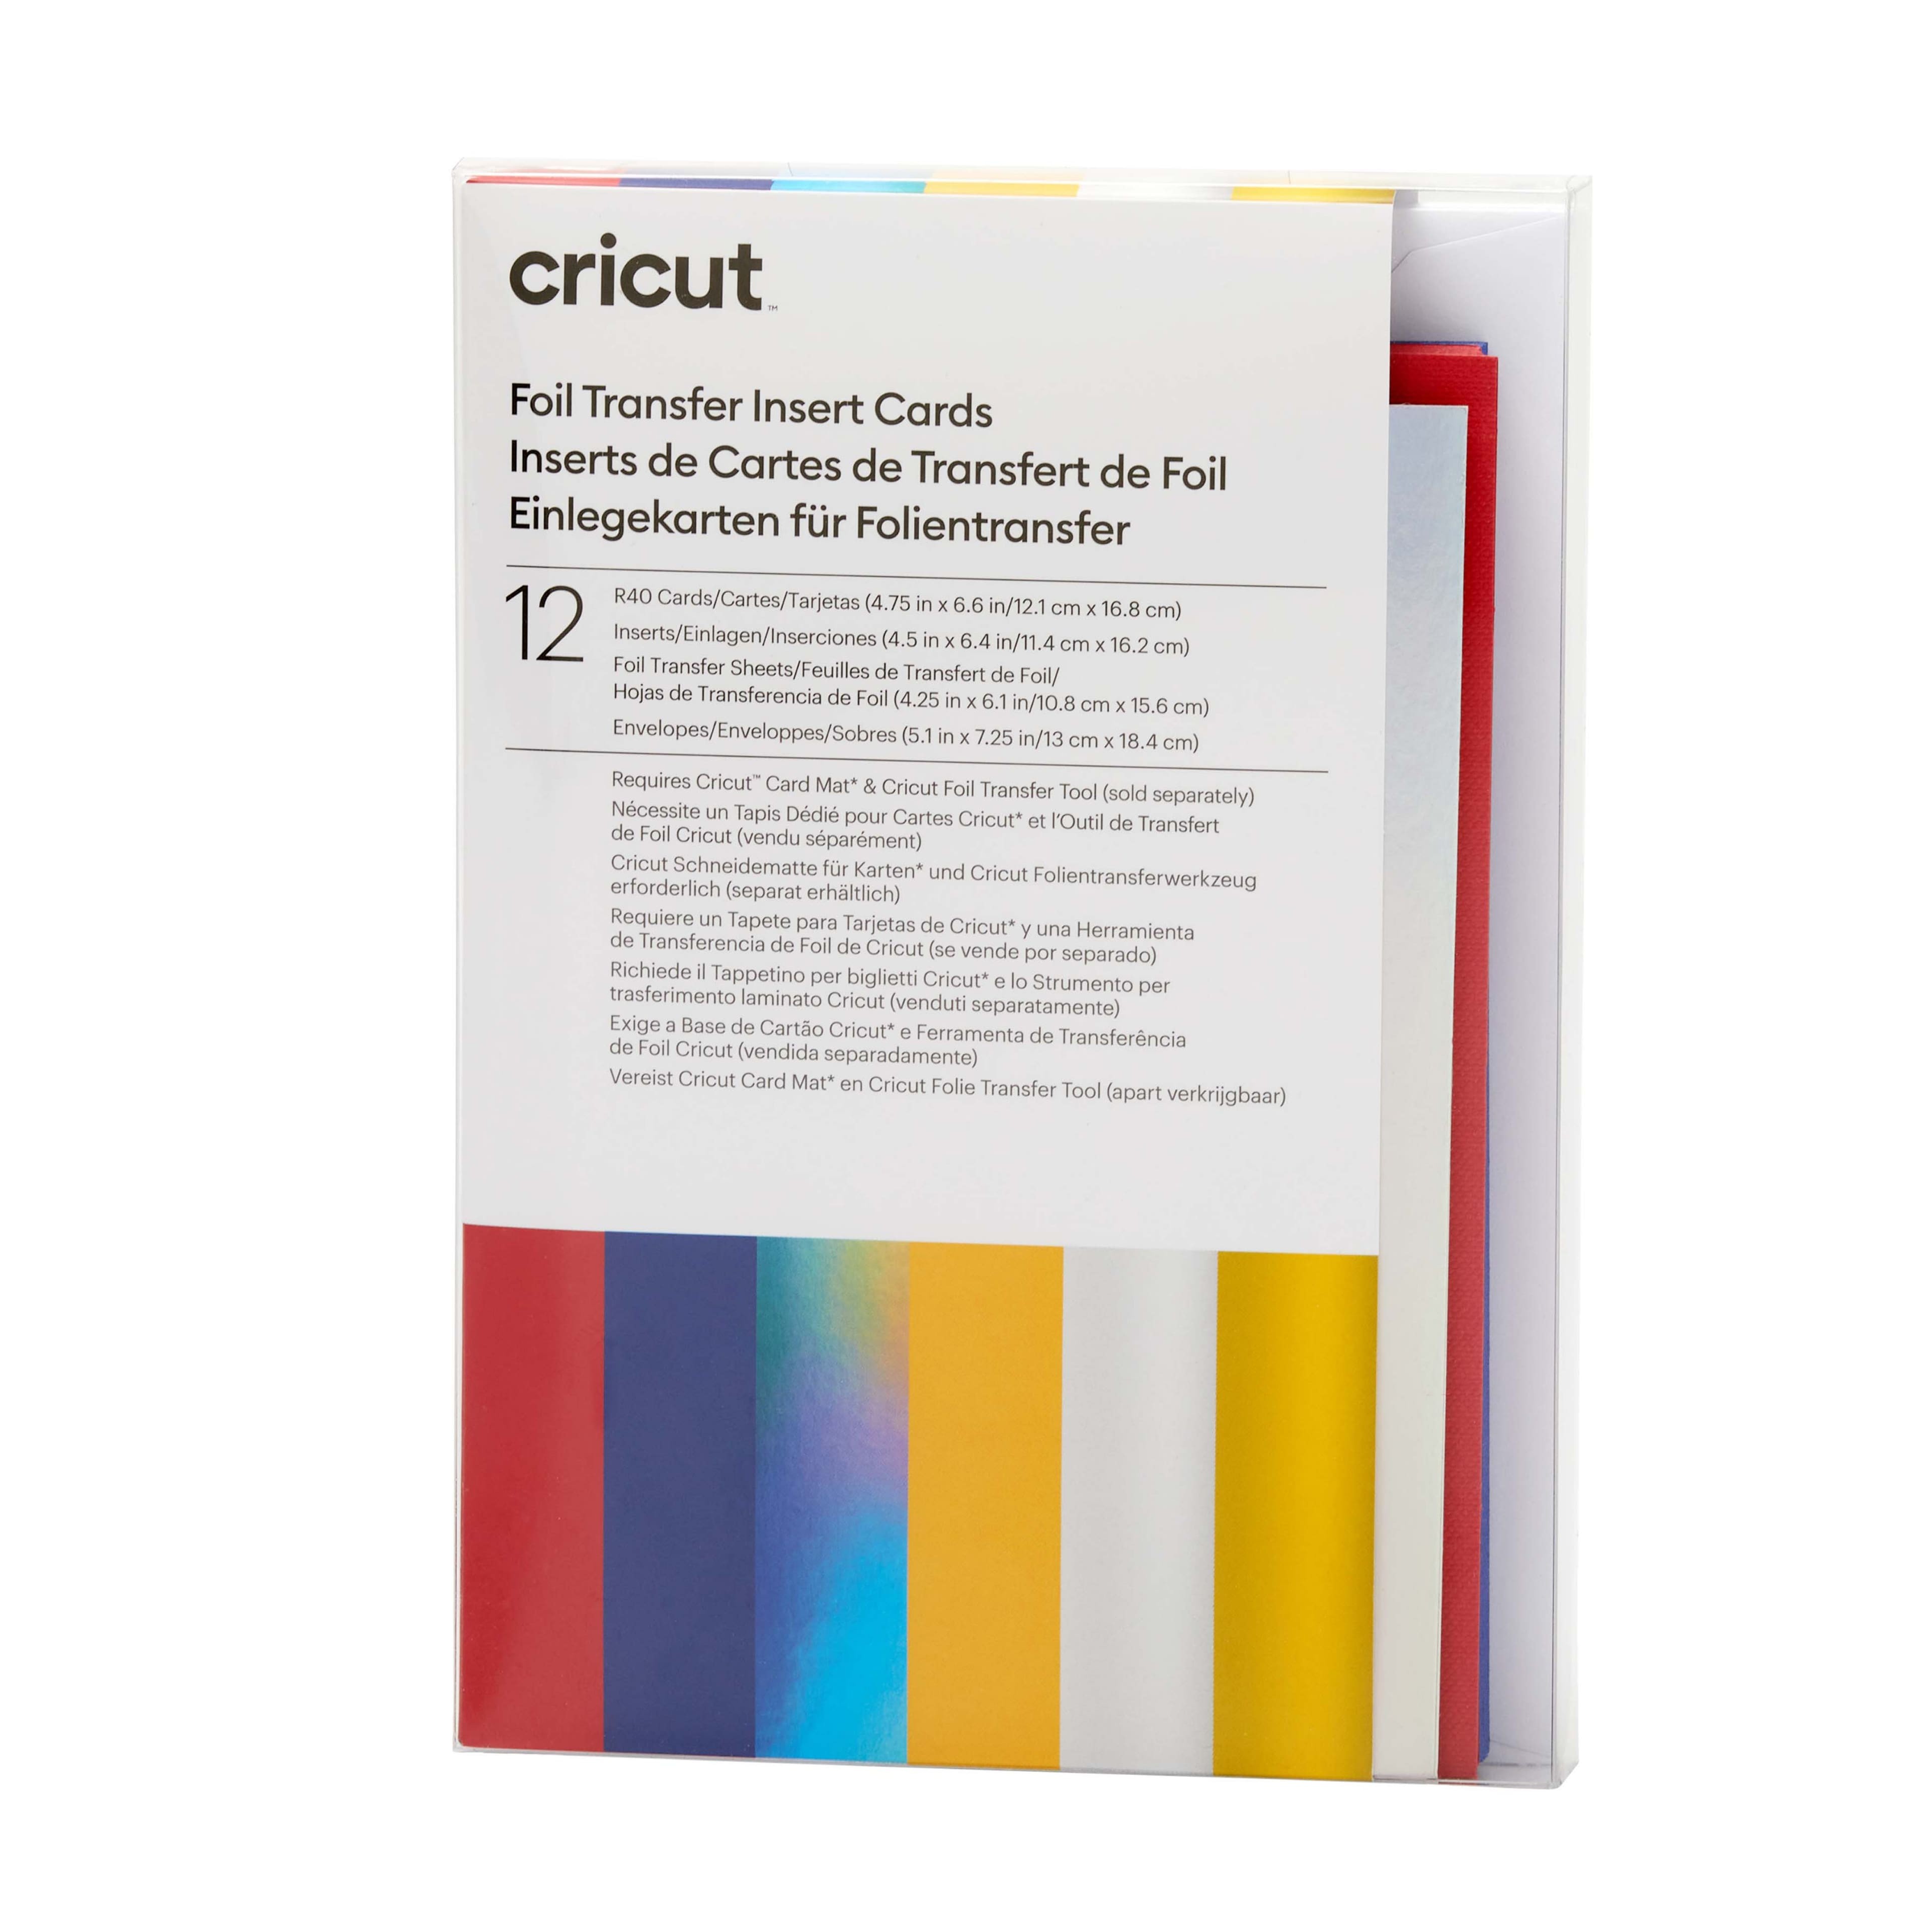 Cricut 35ct Insert Cards Glitz and Glam Sampler